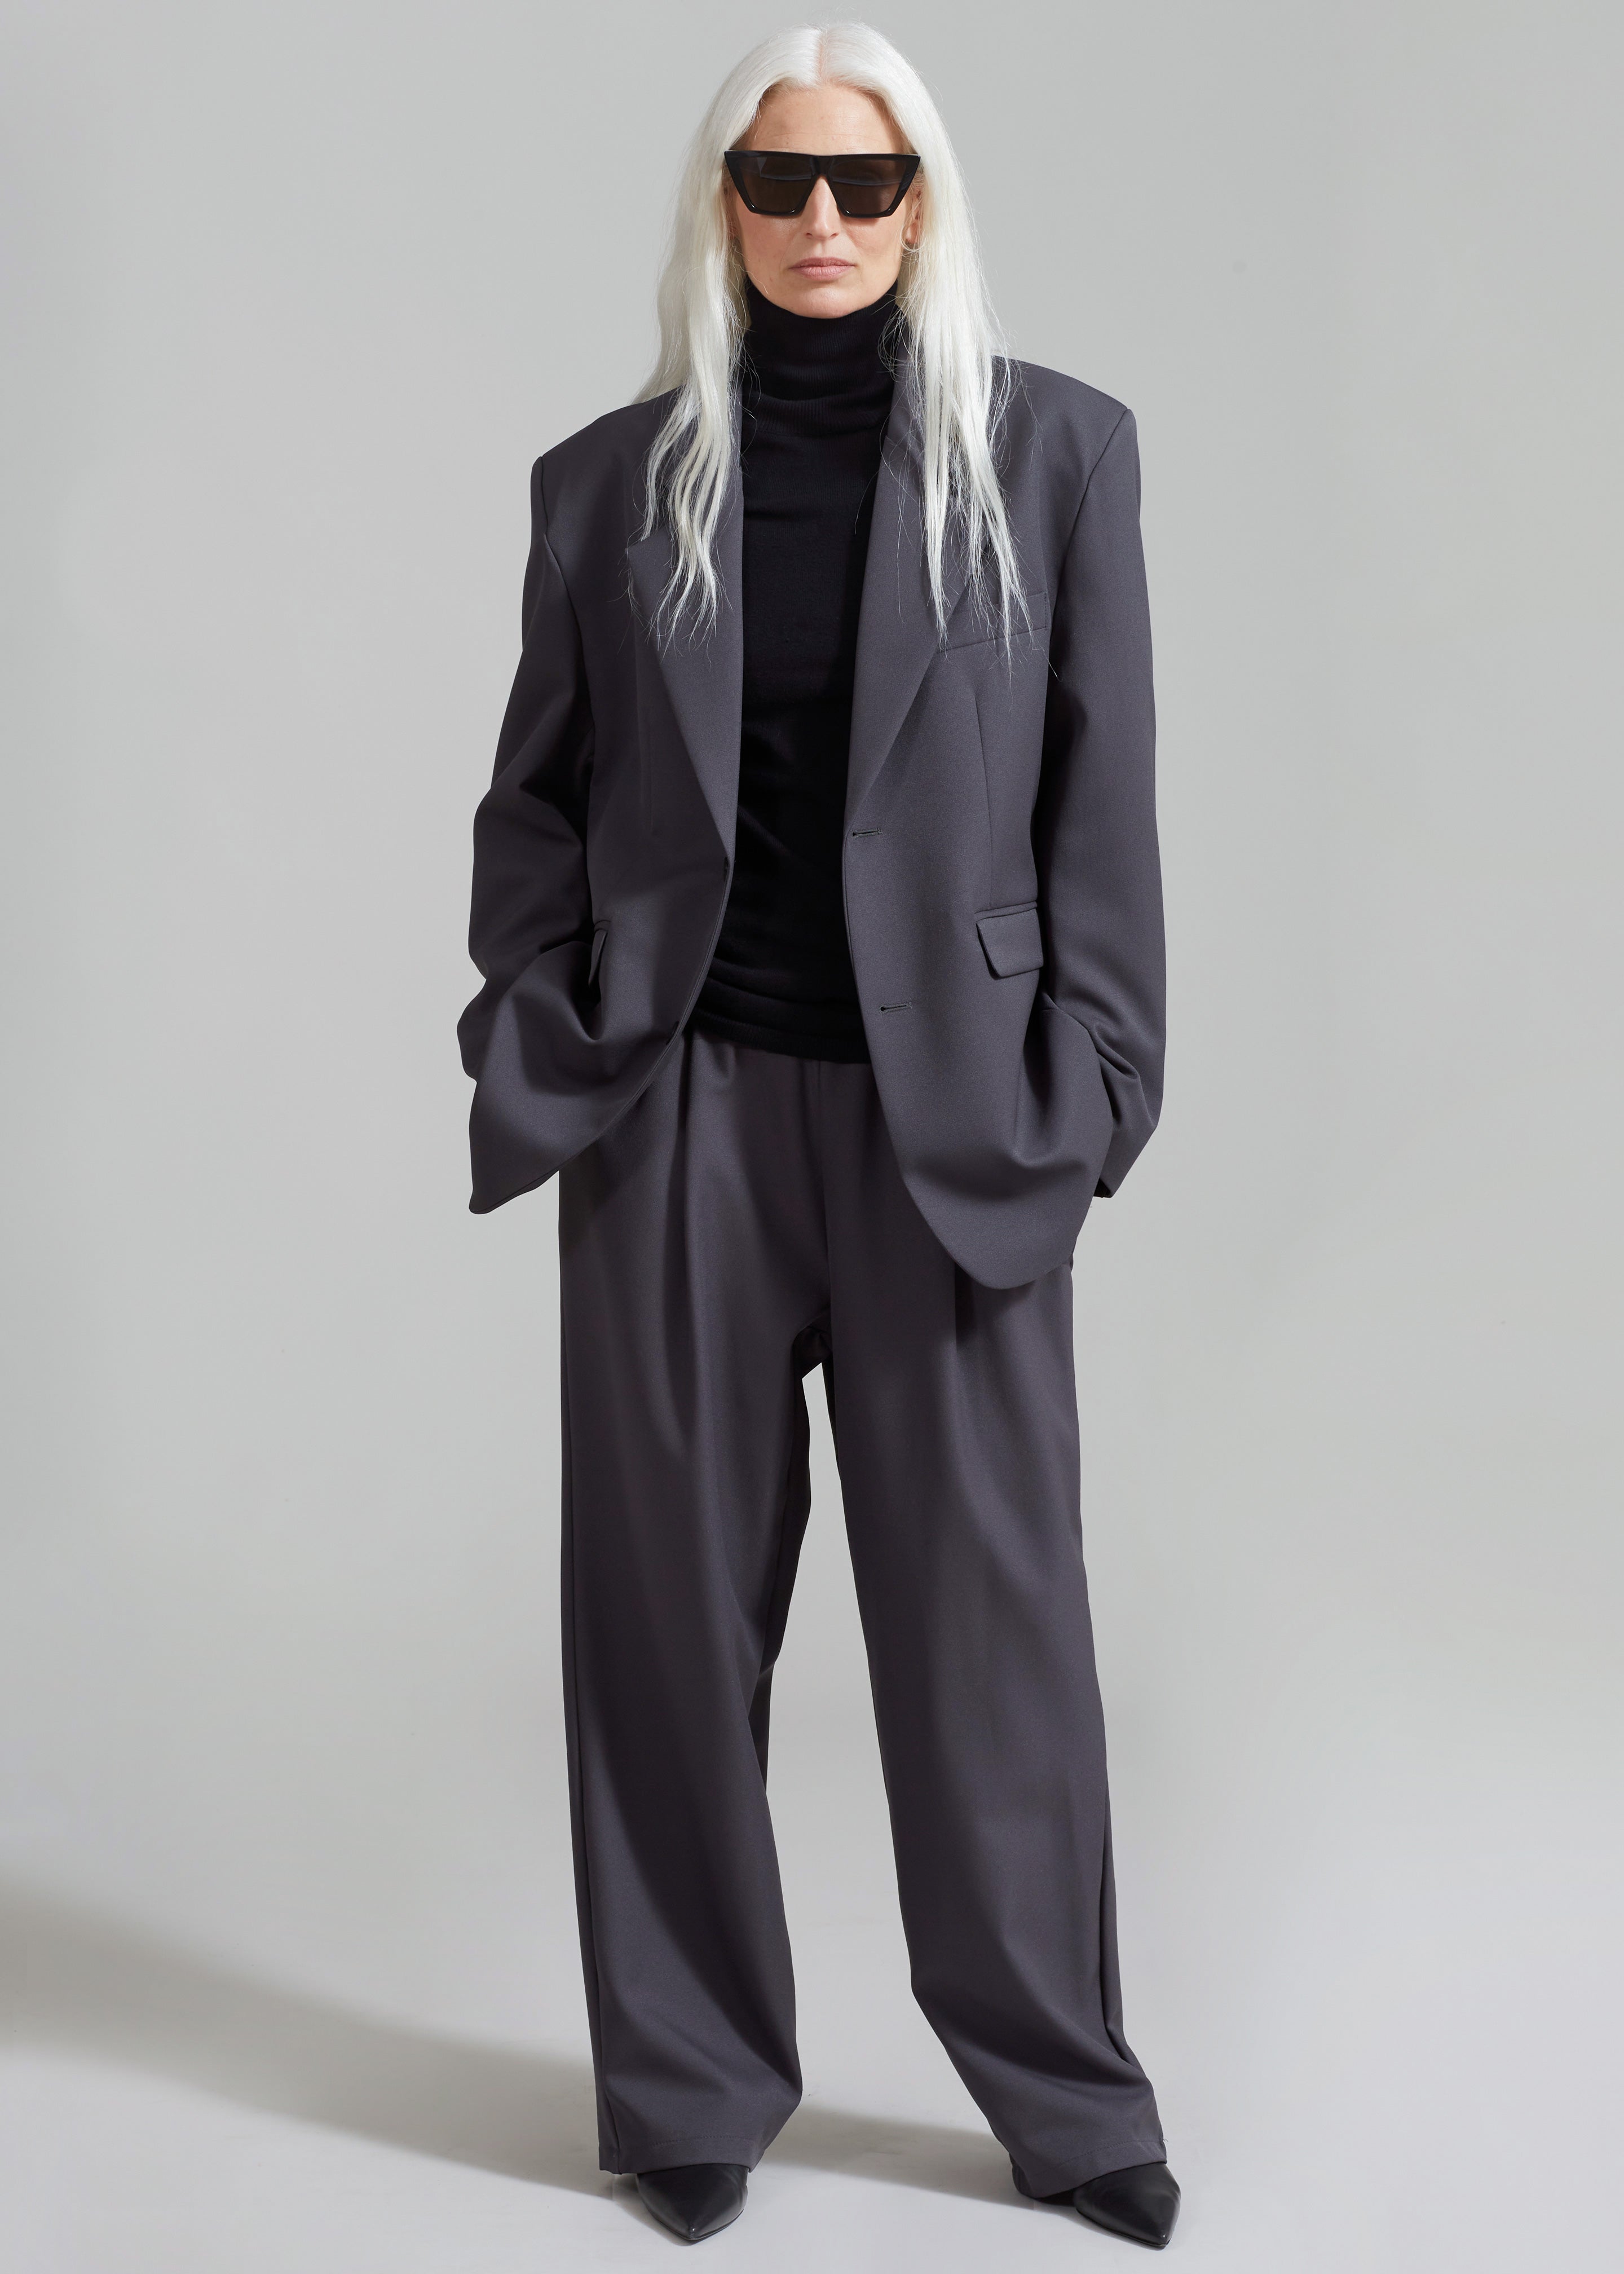 ZARA Women’s Grey Check Jogger Waist Trousers Elasticated Waist UK Size L  (14)